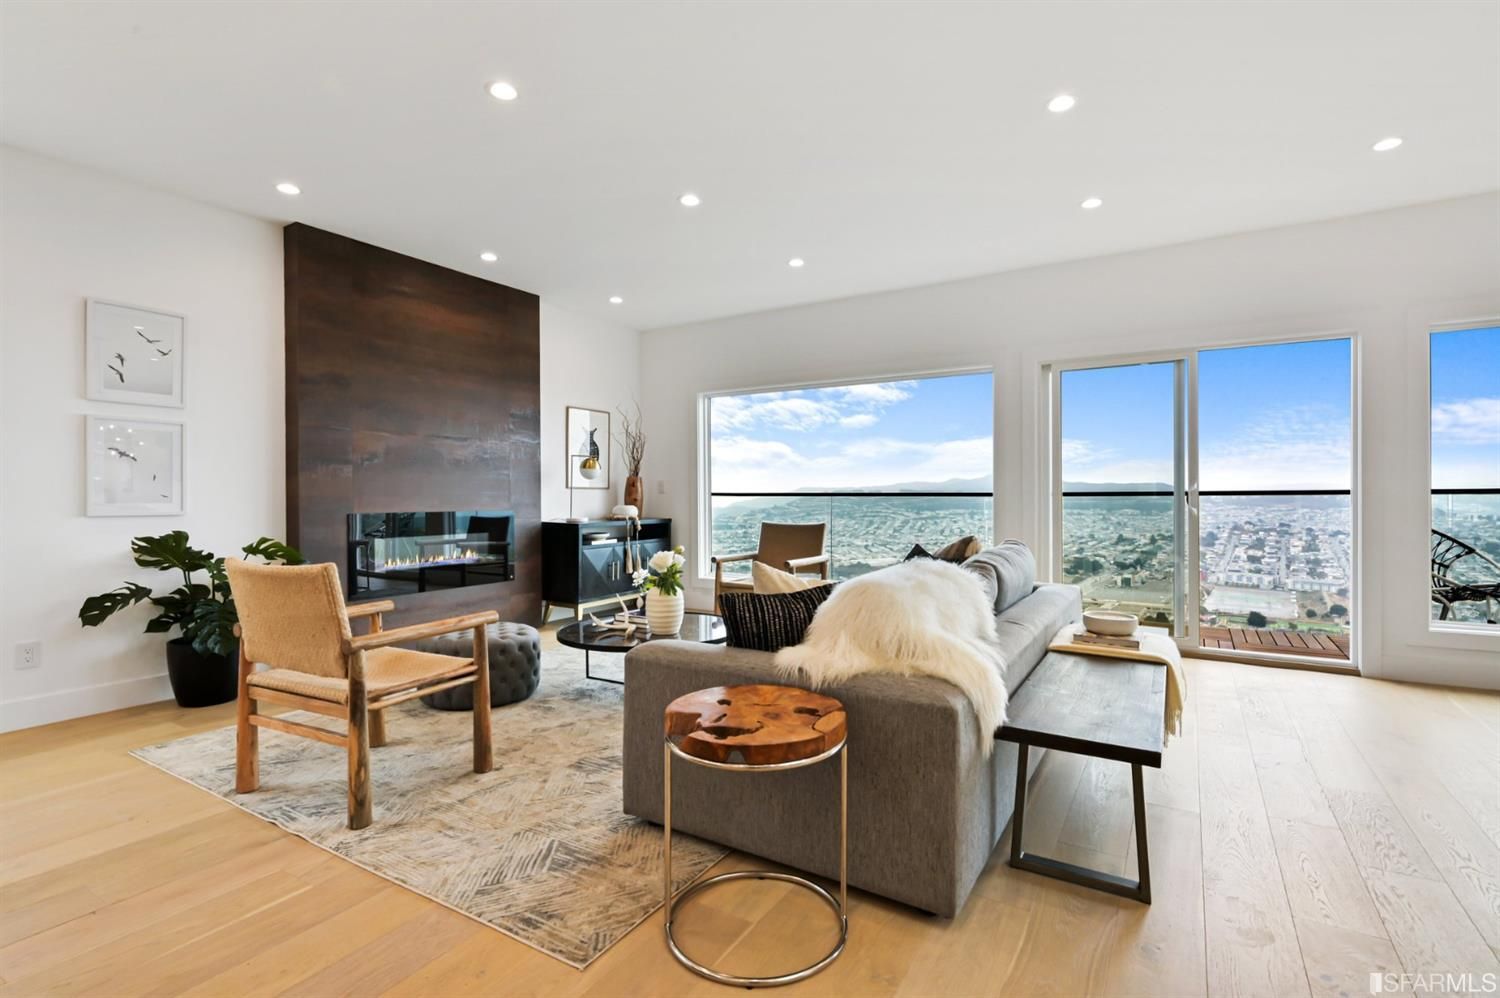 Beautiful modern living room of a San Francisco home